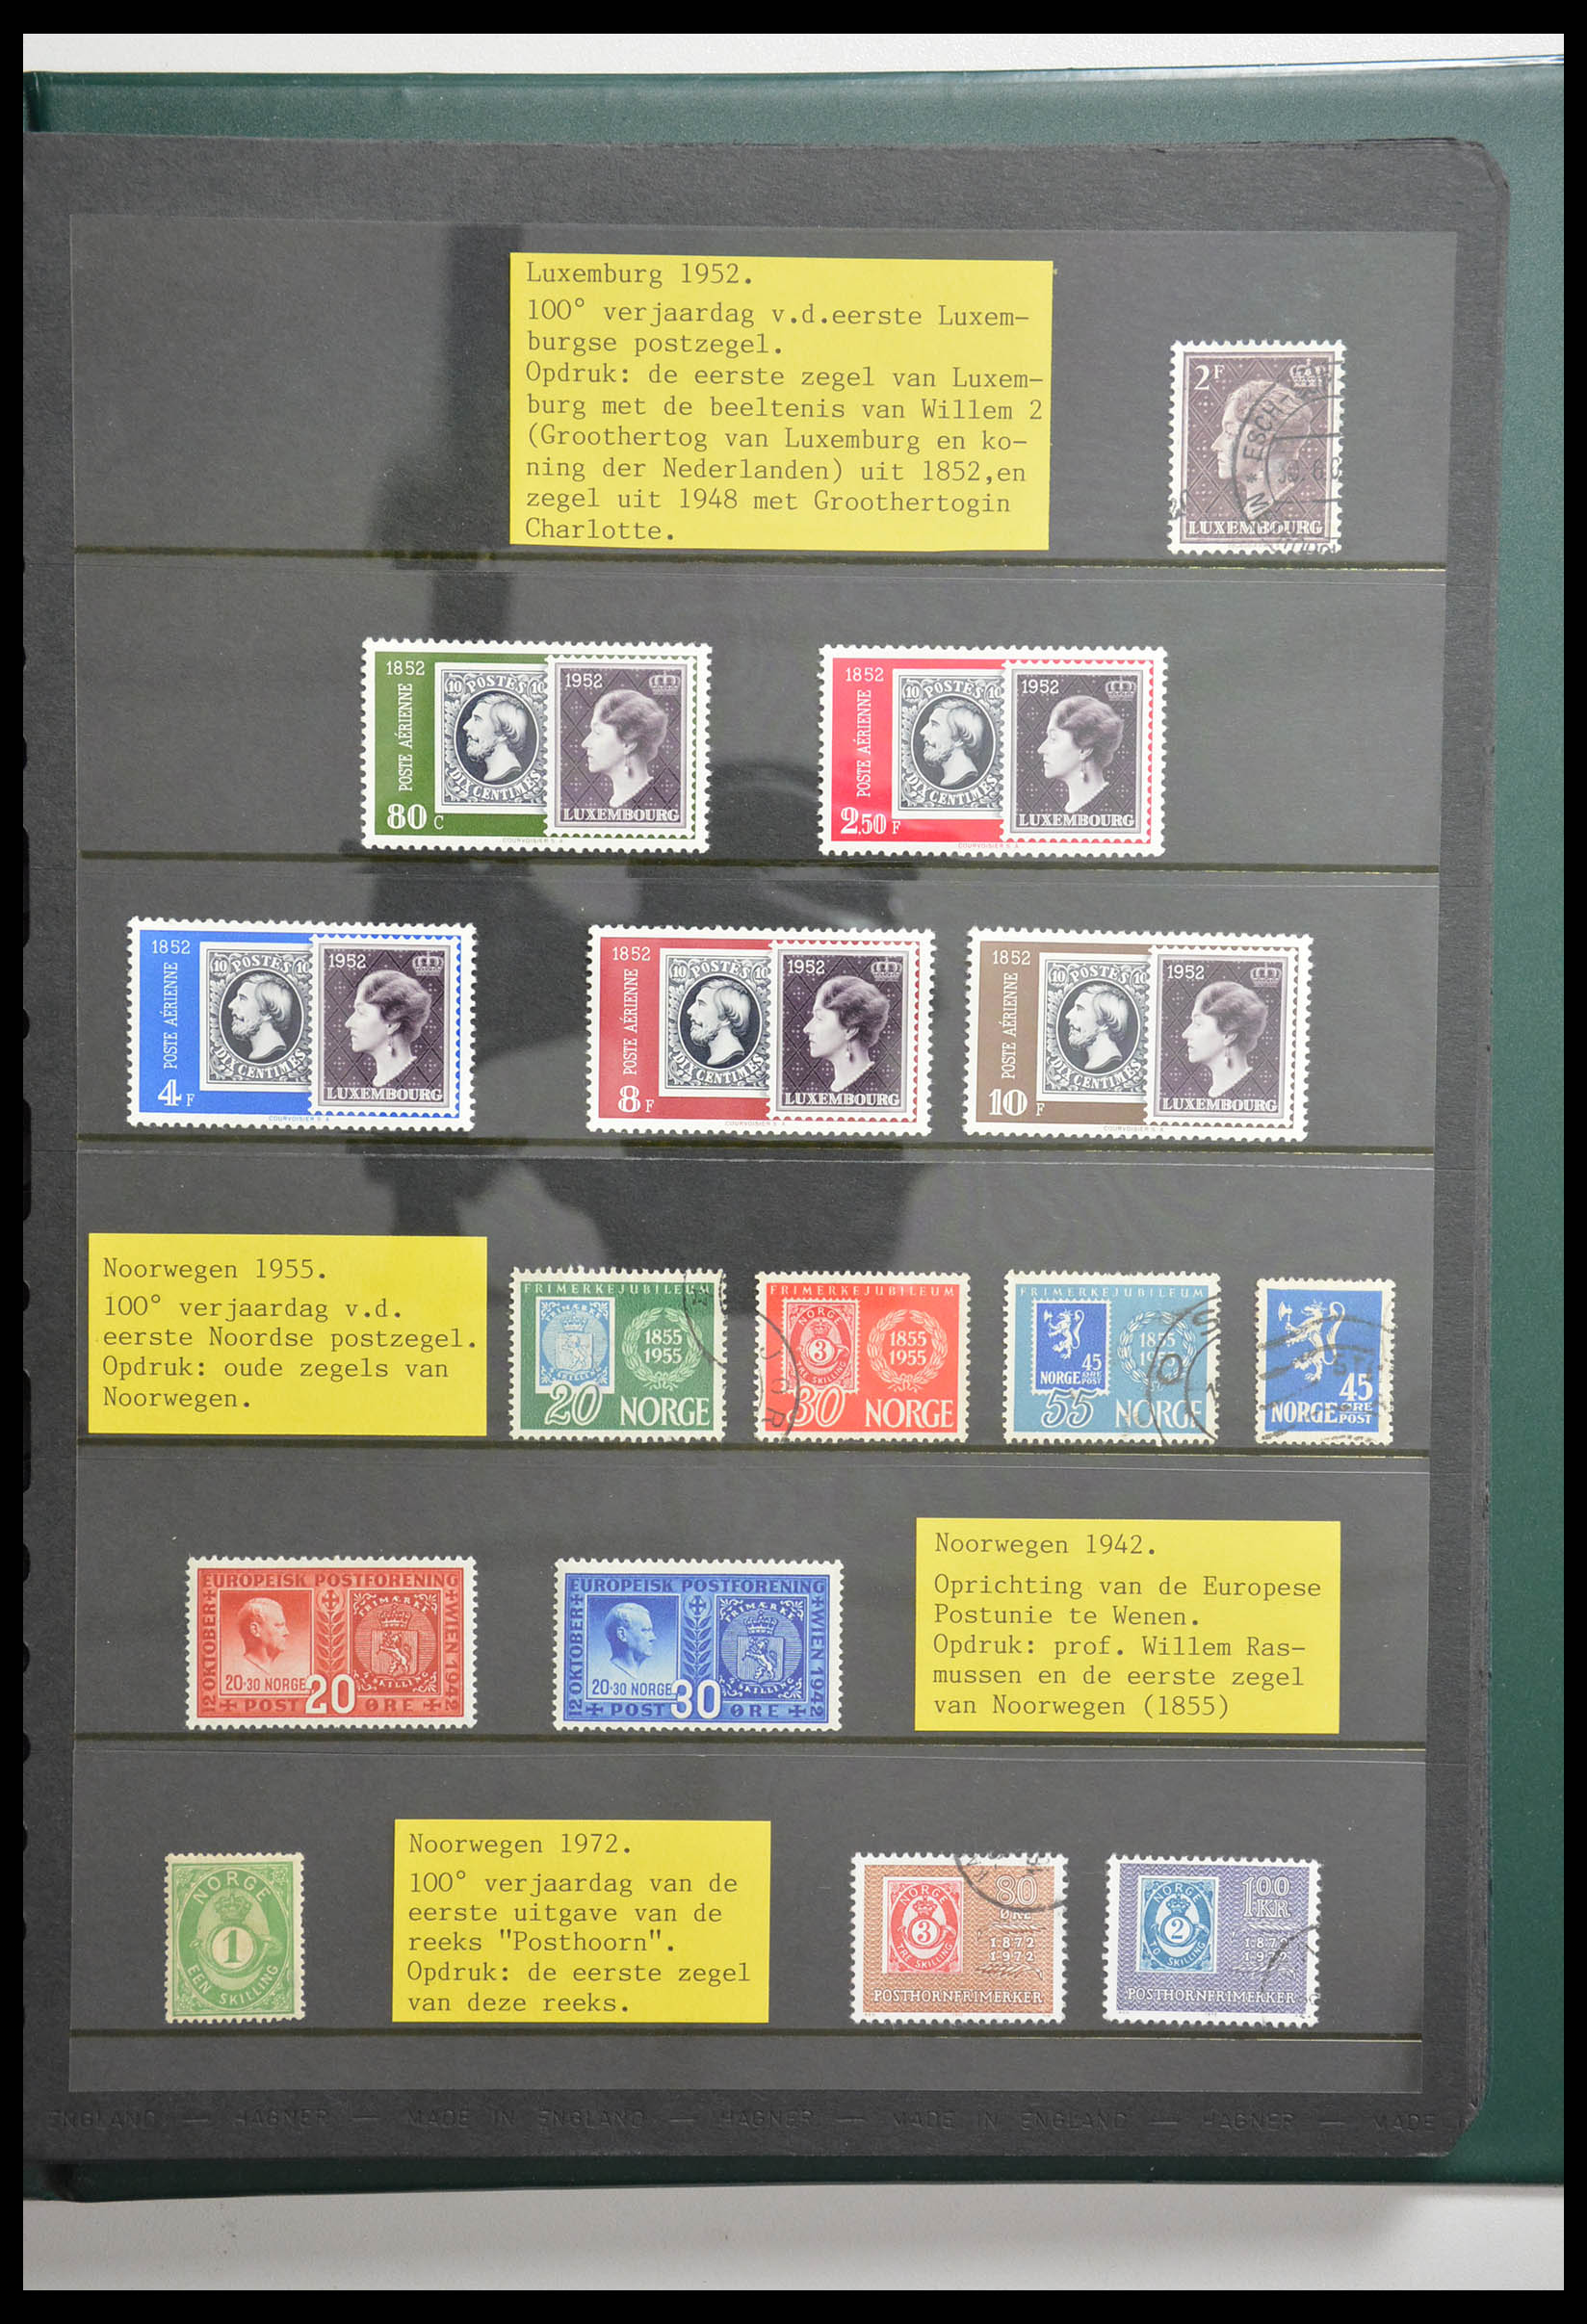 28337 058 - 28337 Postzegel op postzegel 1840-2001.